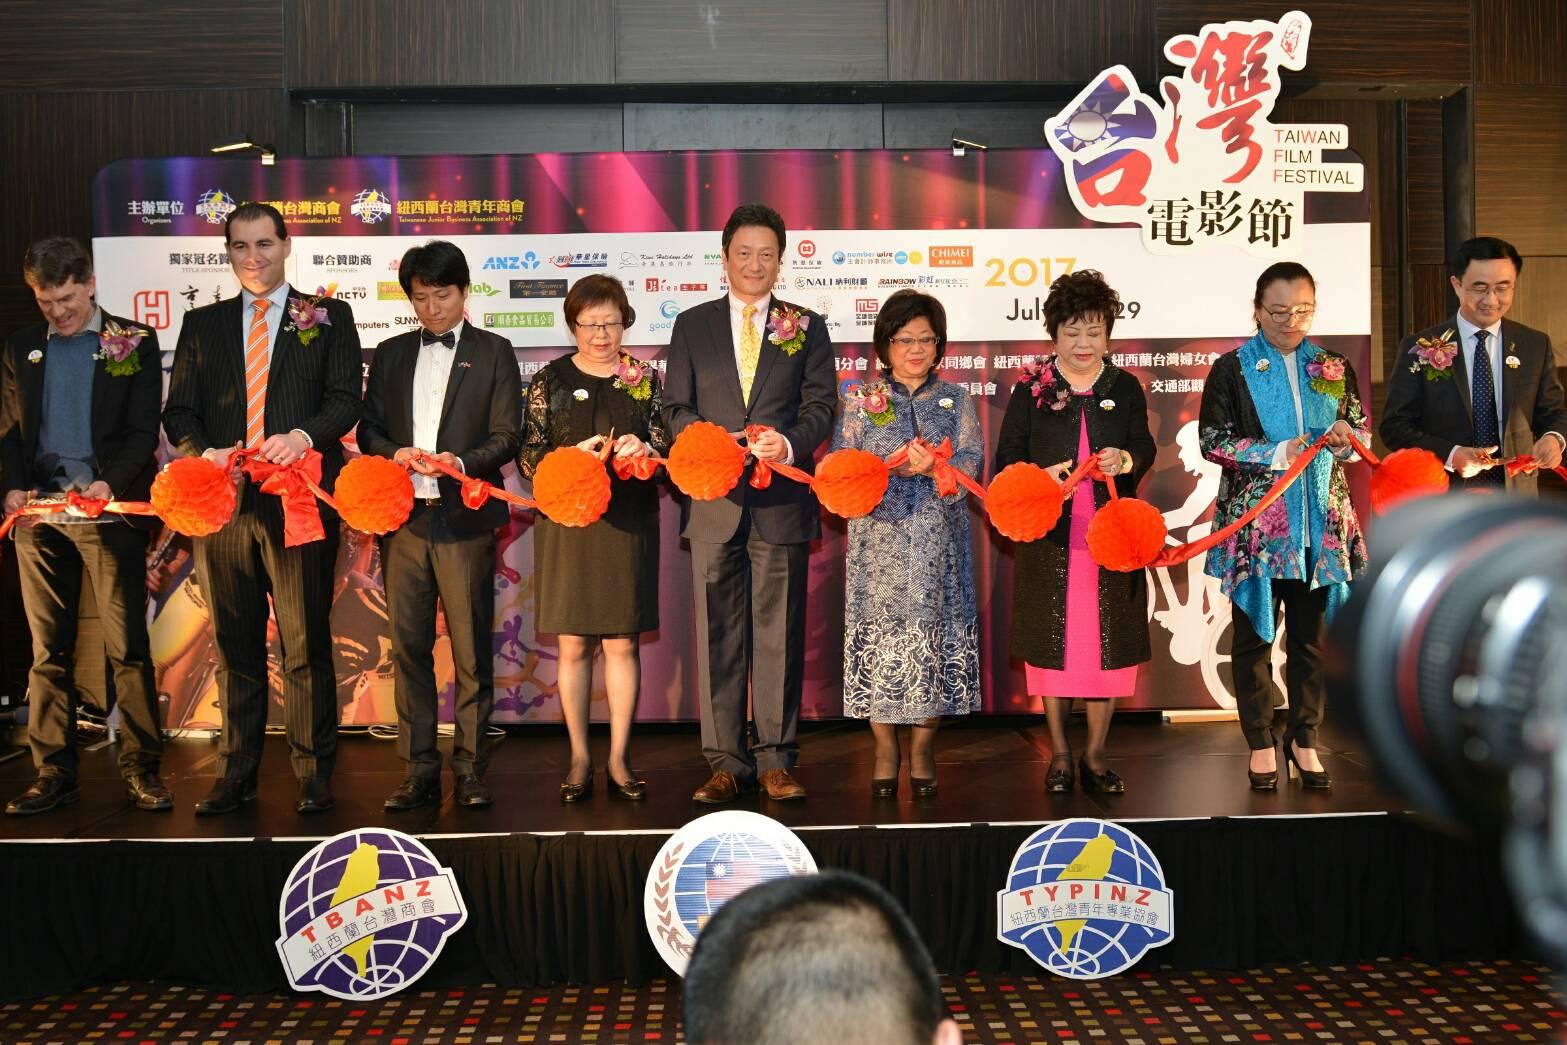 2017 Taiwan Film Festival of New Zealand